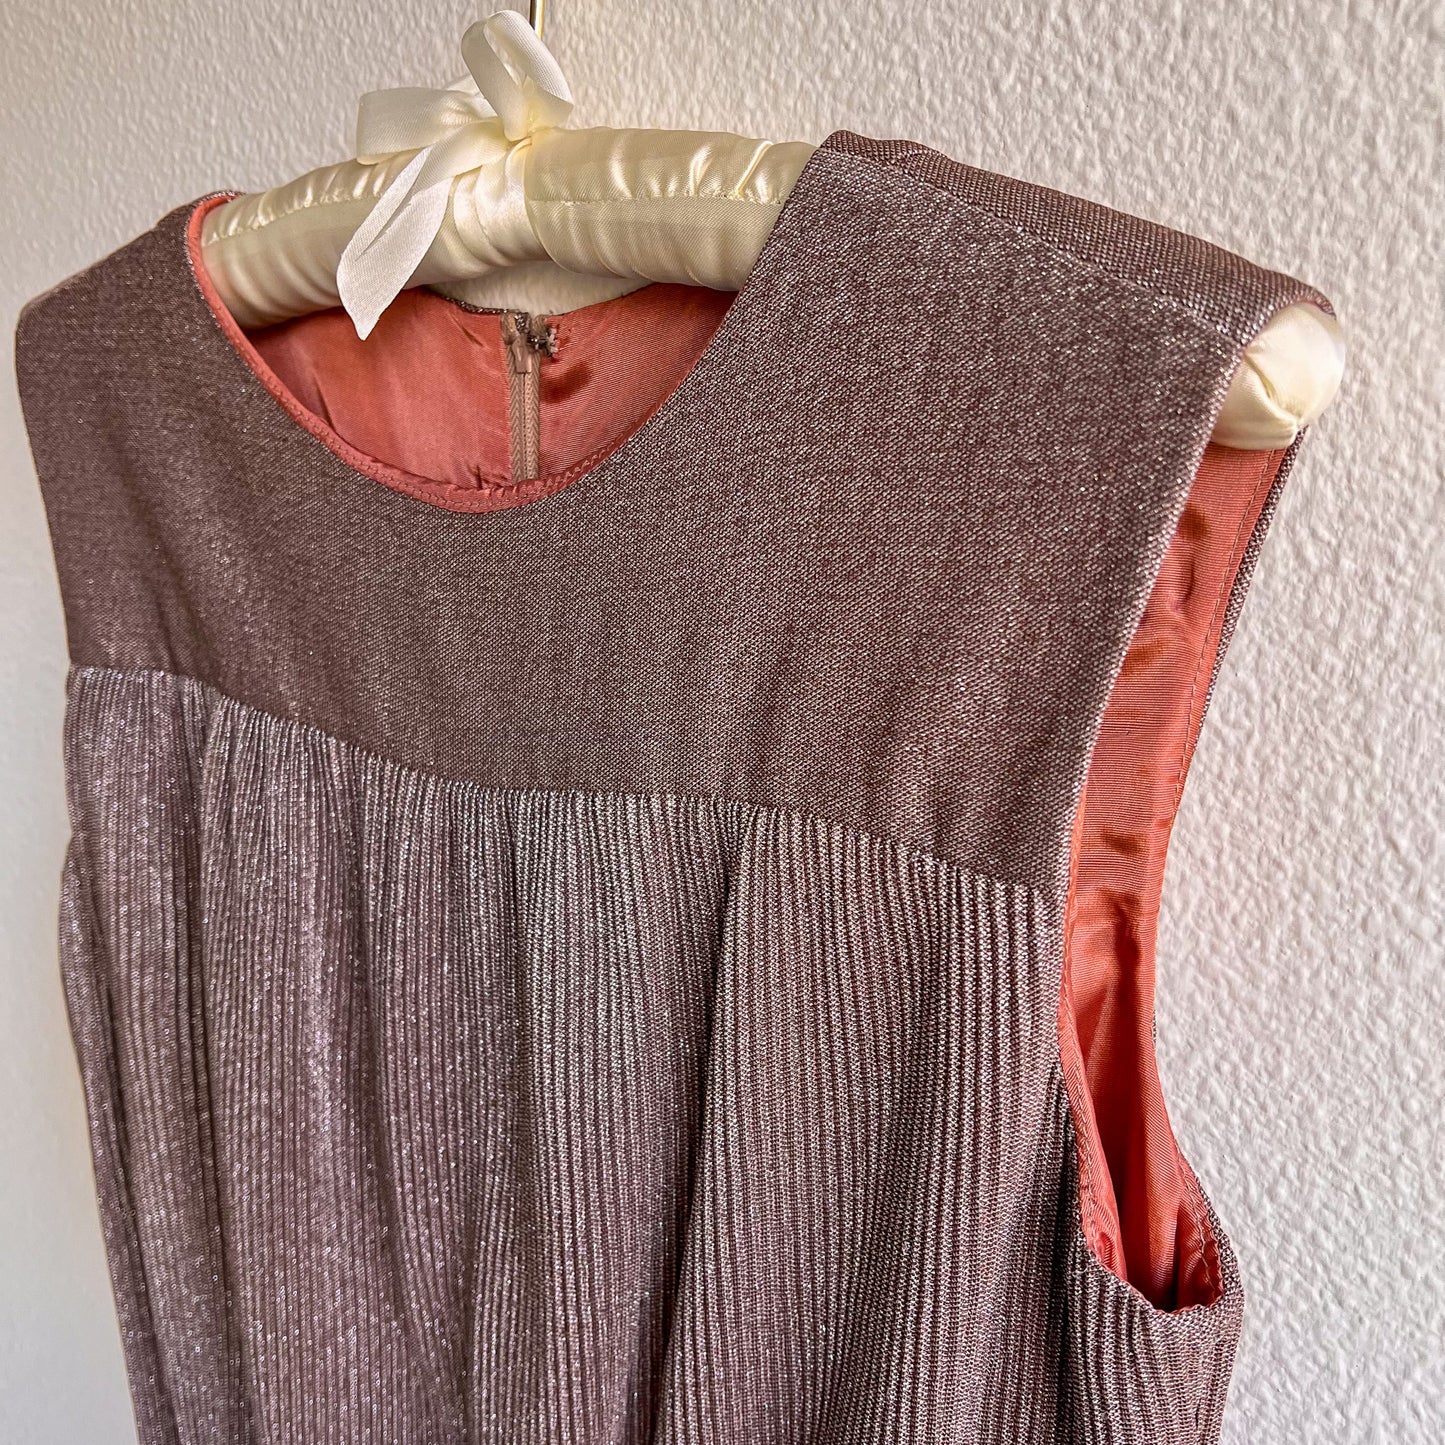 1960s Copper Metallic Pleated Mod Dress With Belt (S/M)